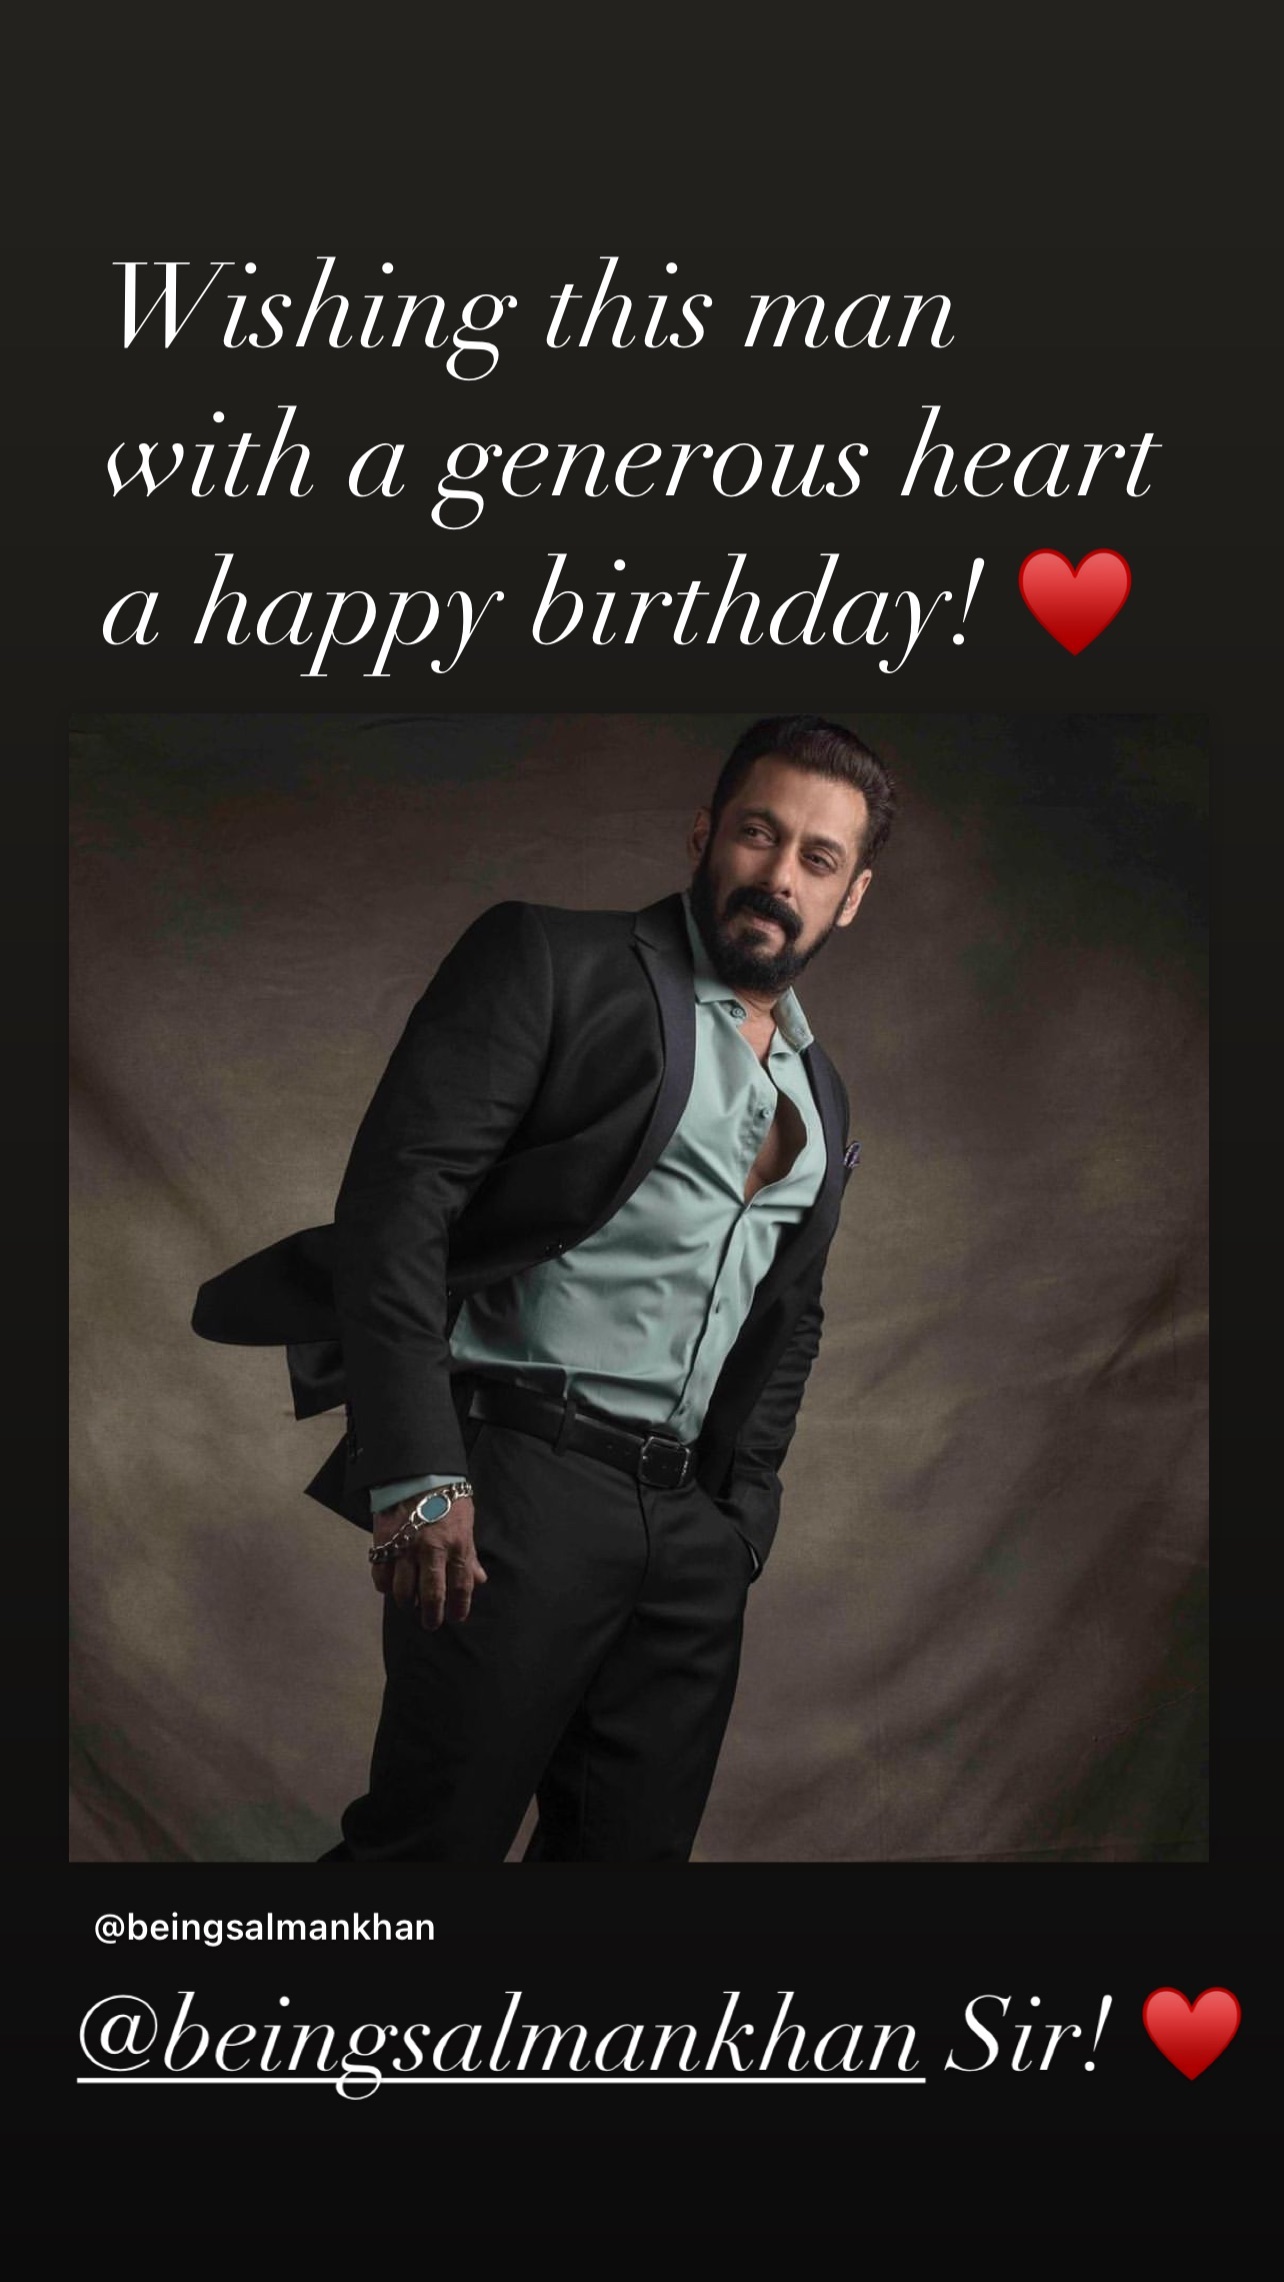 Shehnaaz Gill shares birthday wishes for Salman Khan